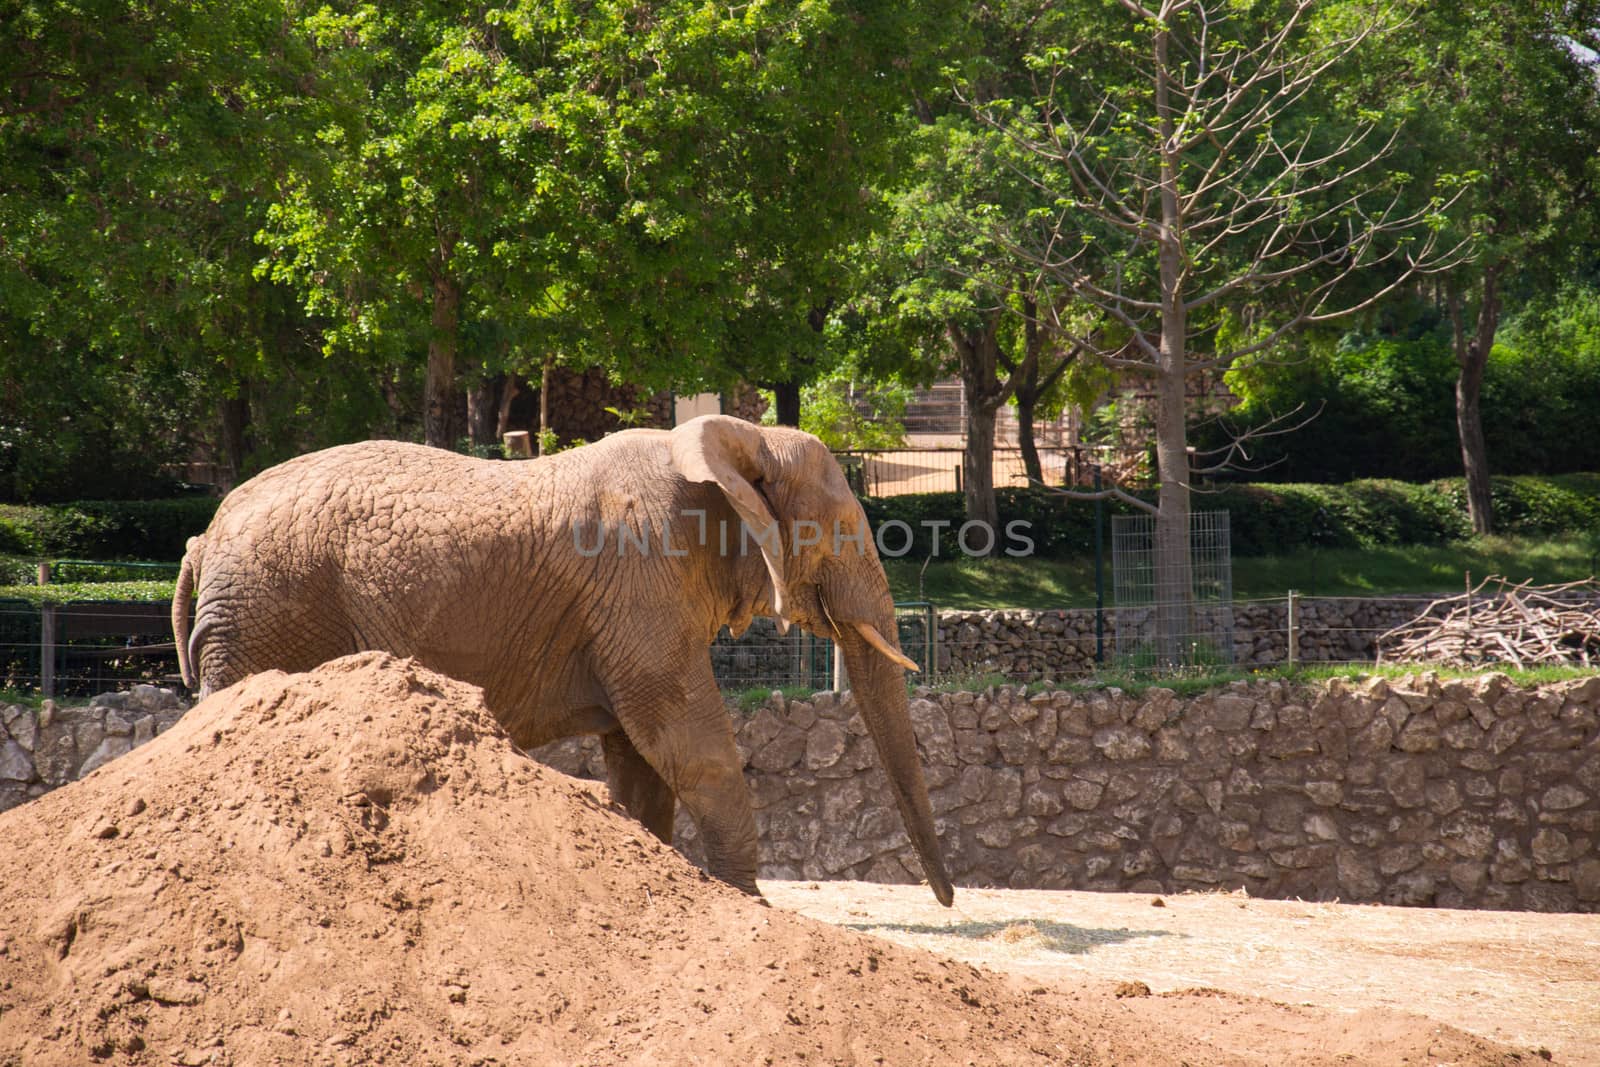 A male elephant walking calmly in the zoo